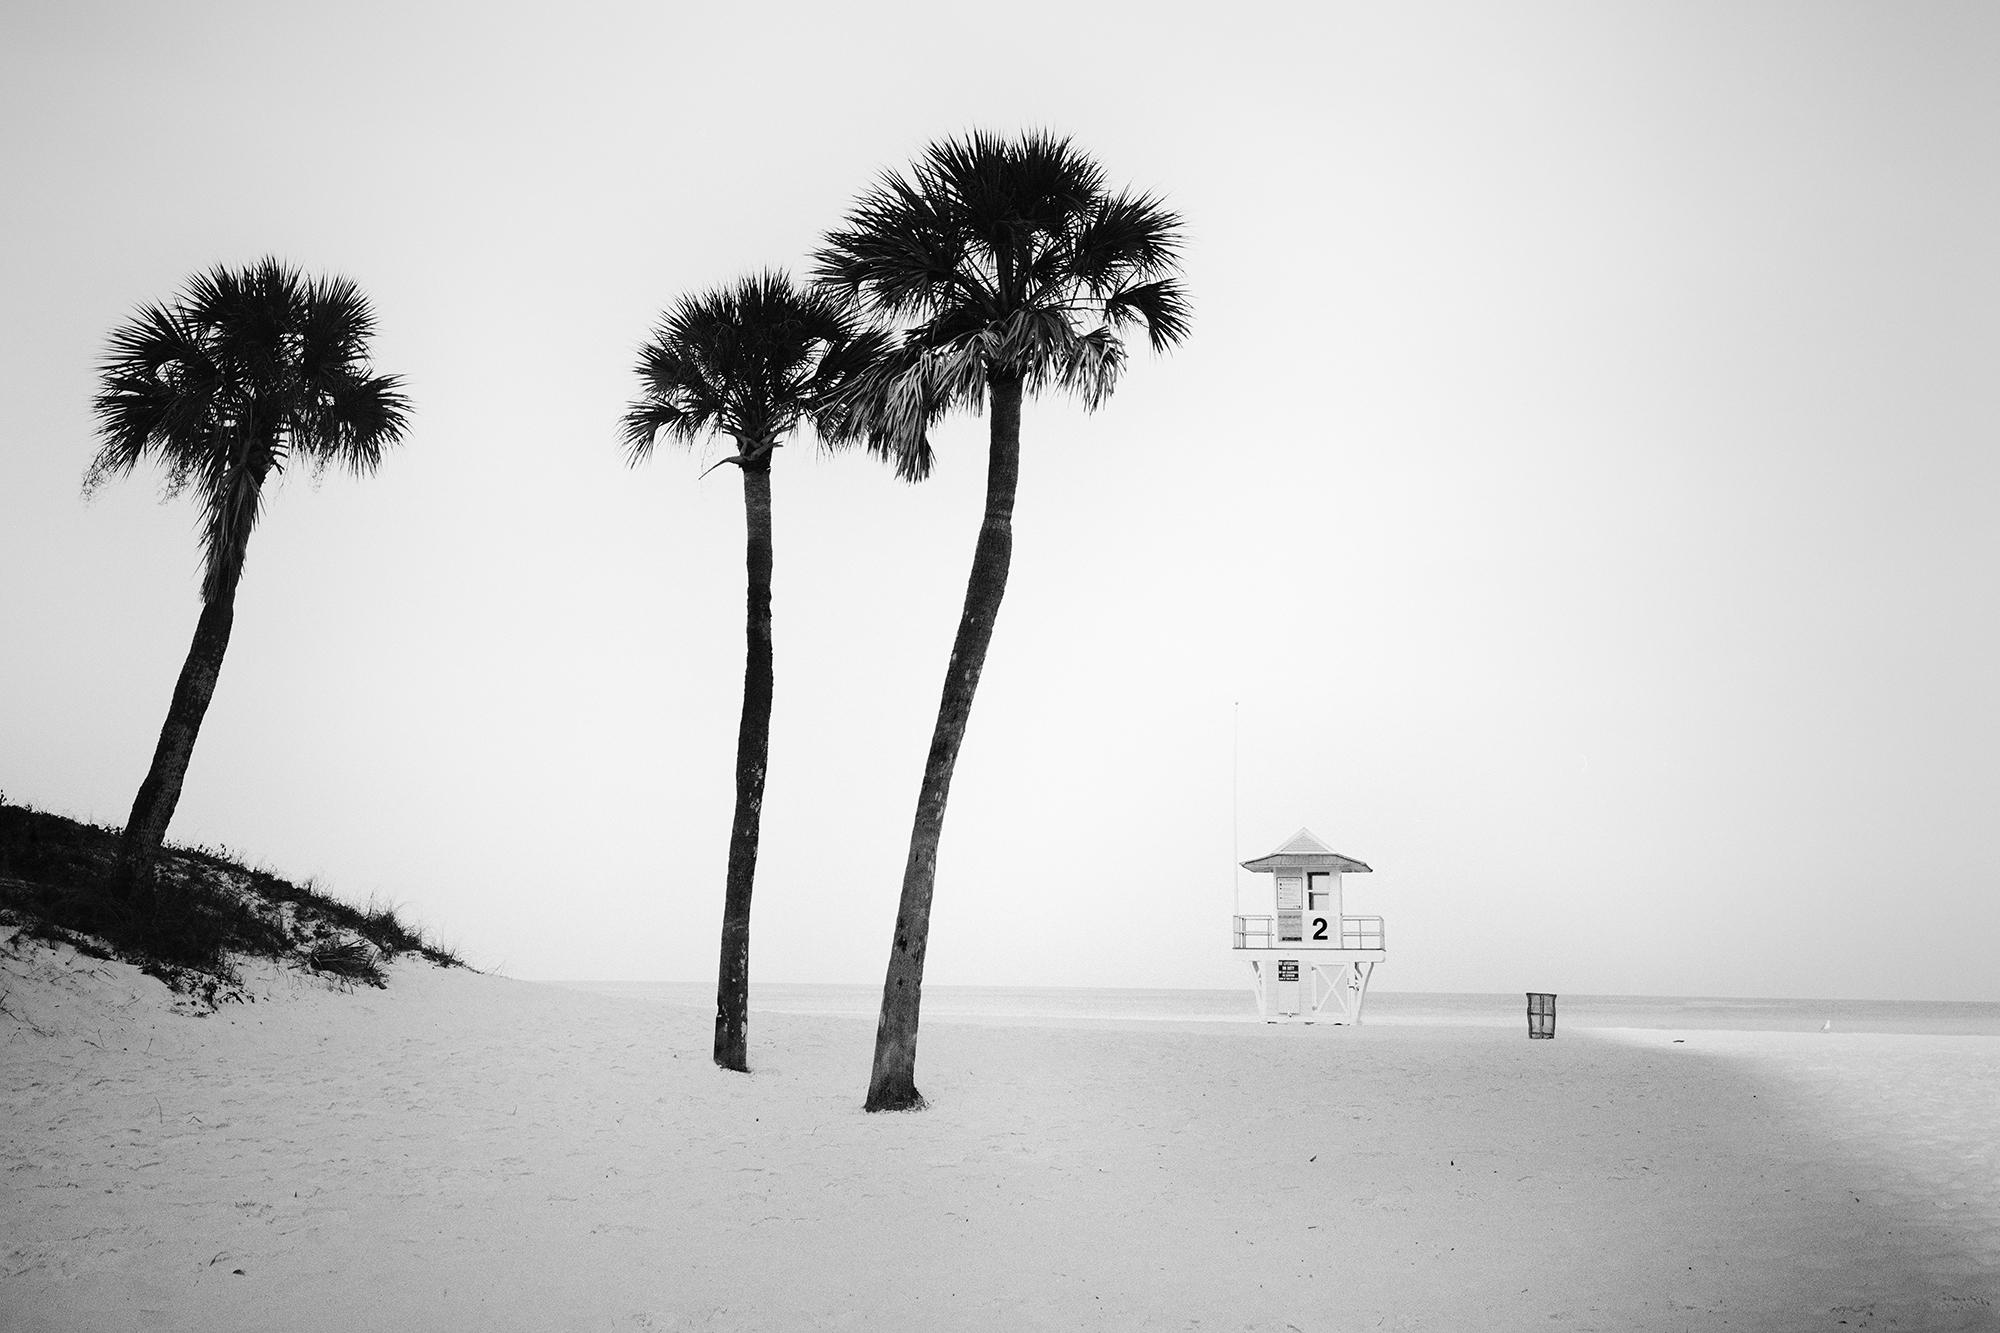 Gerald Berghammer Landscape Photograph - Lifeguard Tower, Miami Beach, Florida, USA, black & white landscape photography